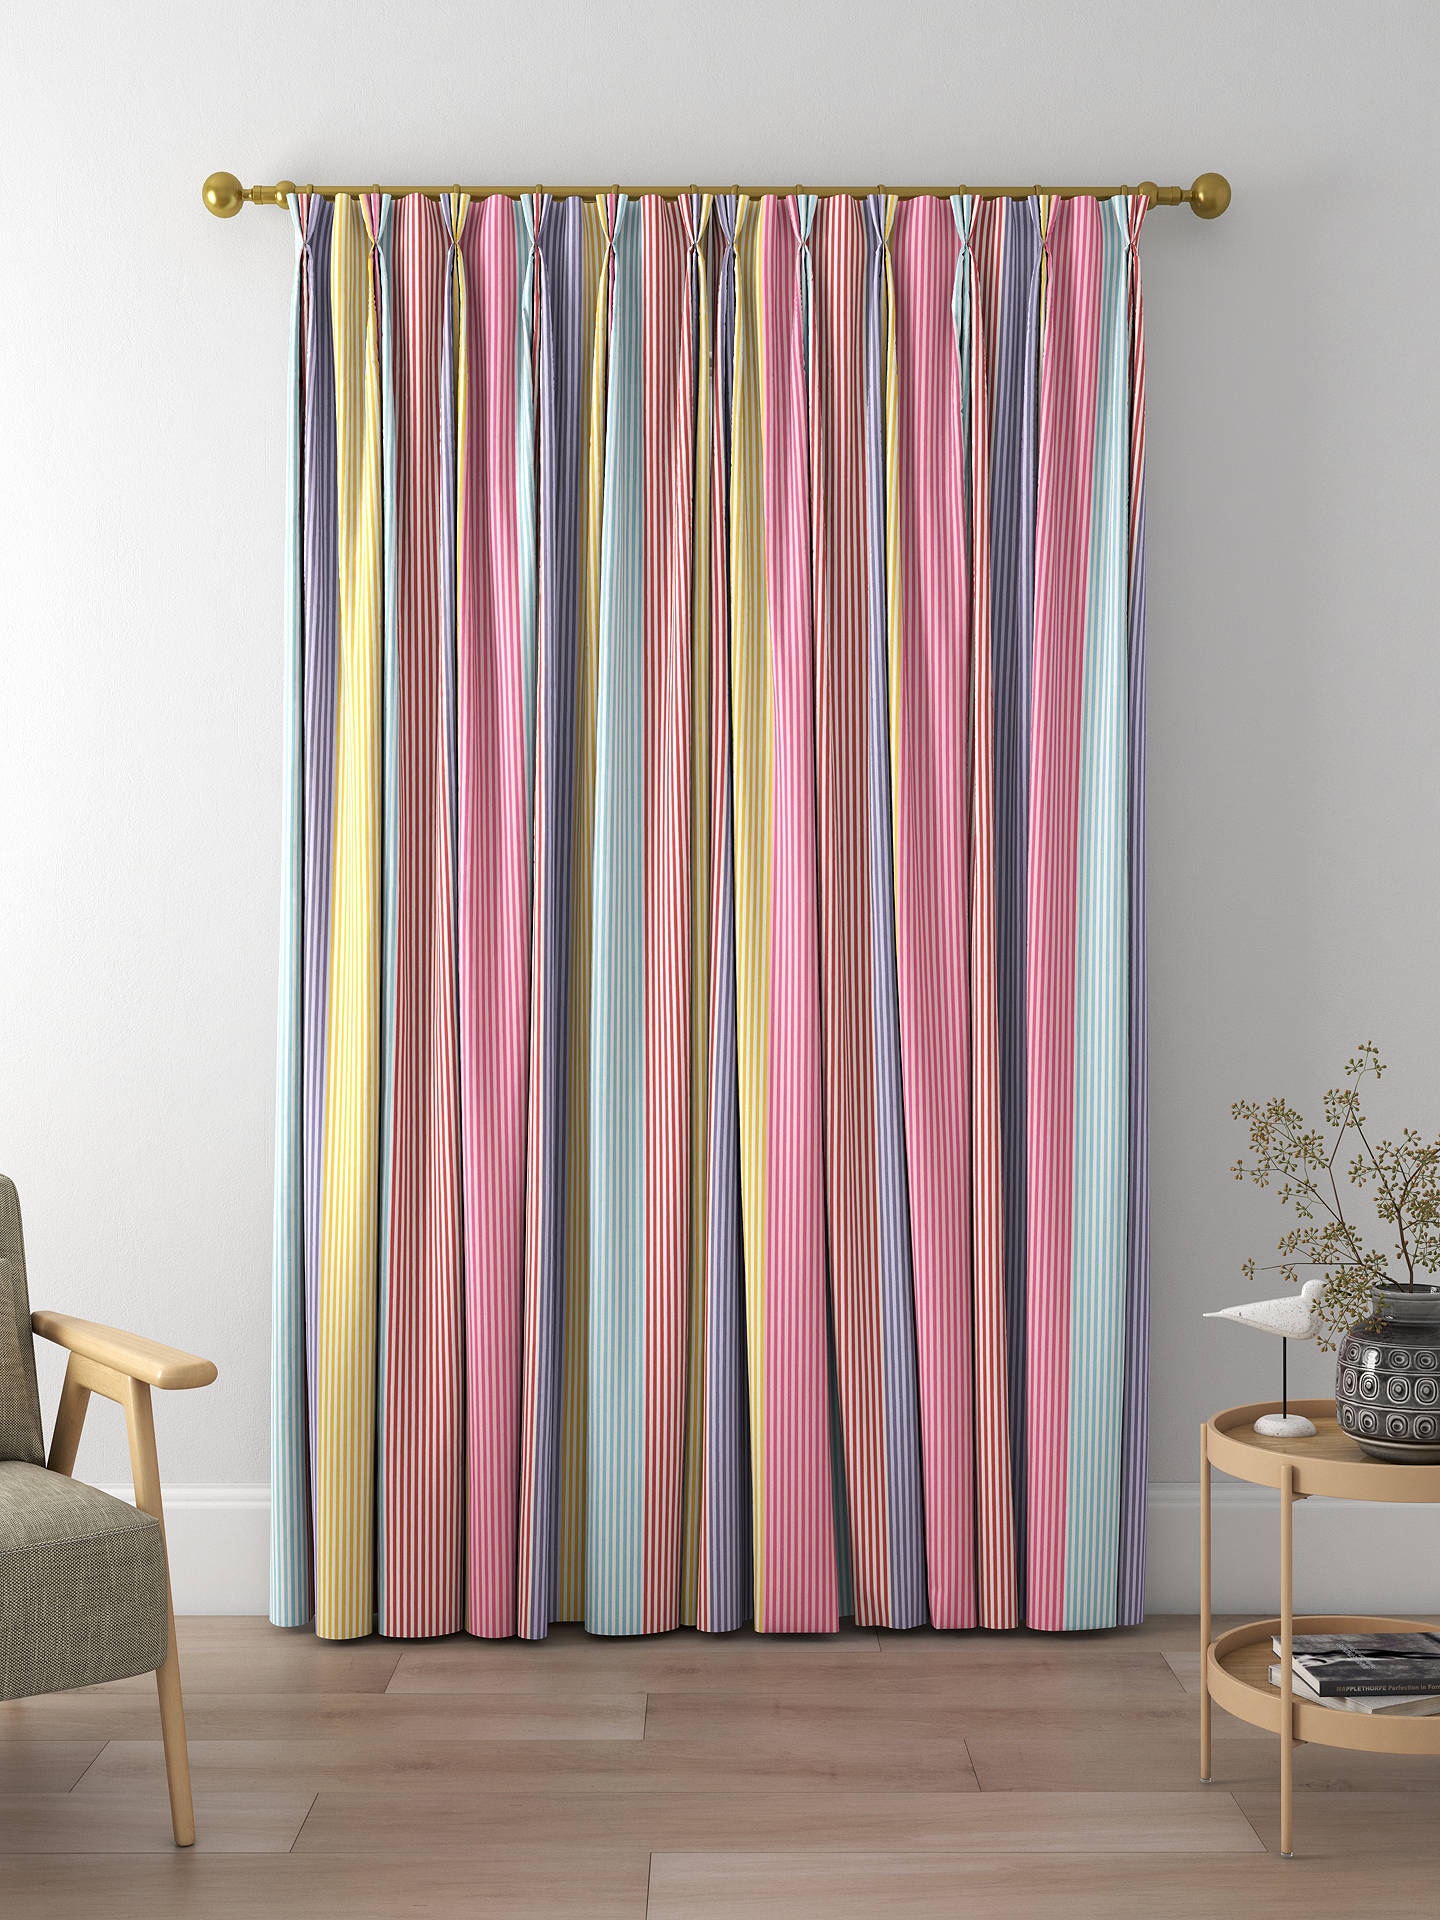 Harlequin Funfair Stripe Made to Measure Curtains, Grape/Cherry